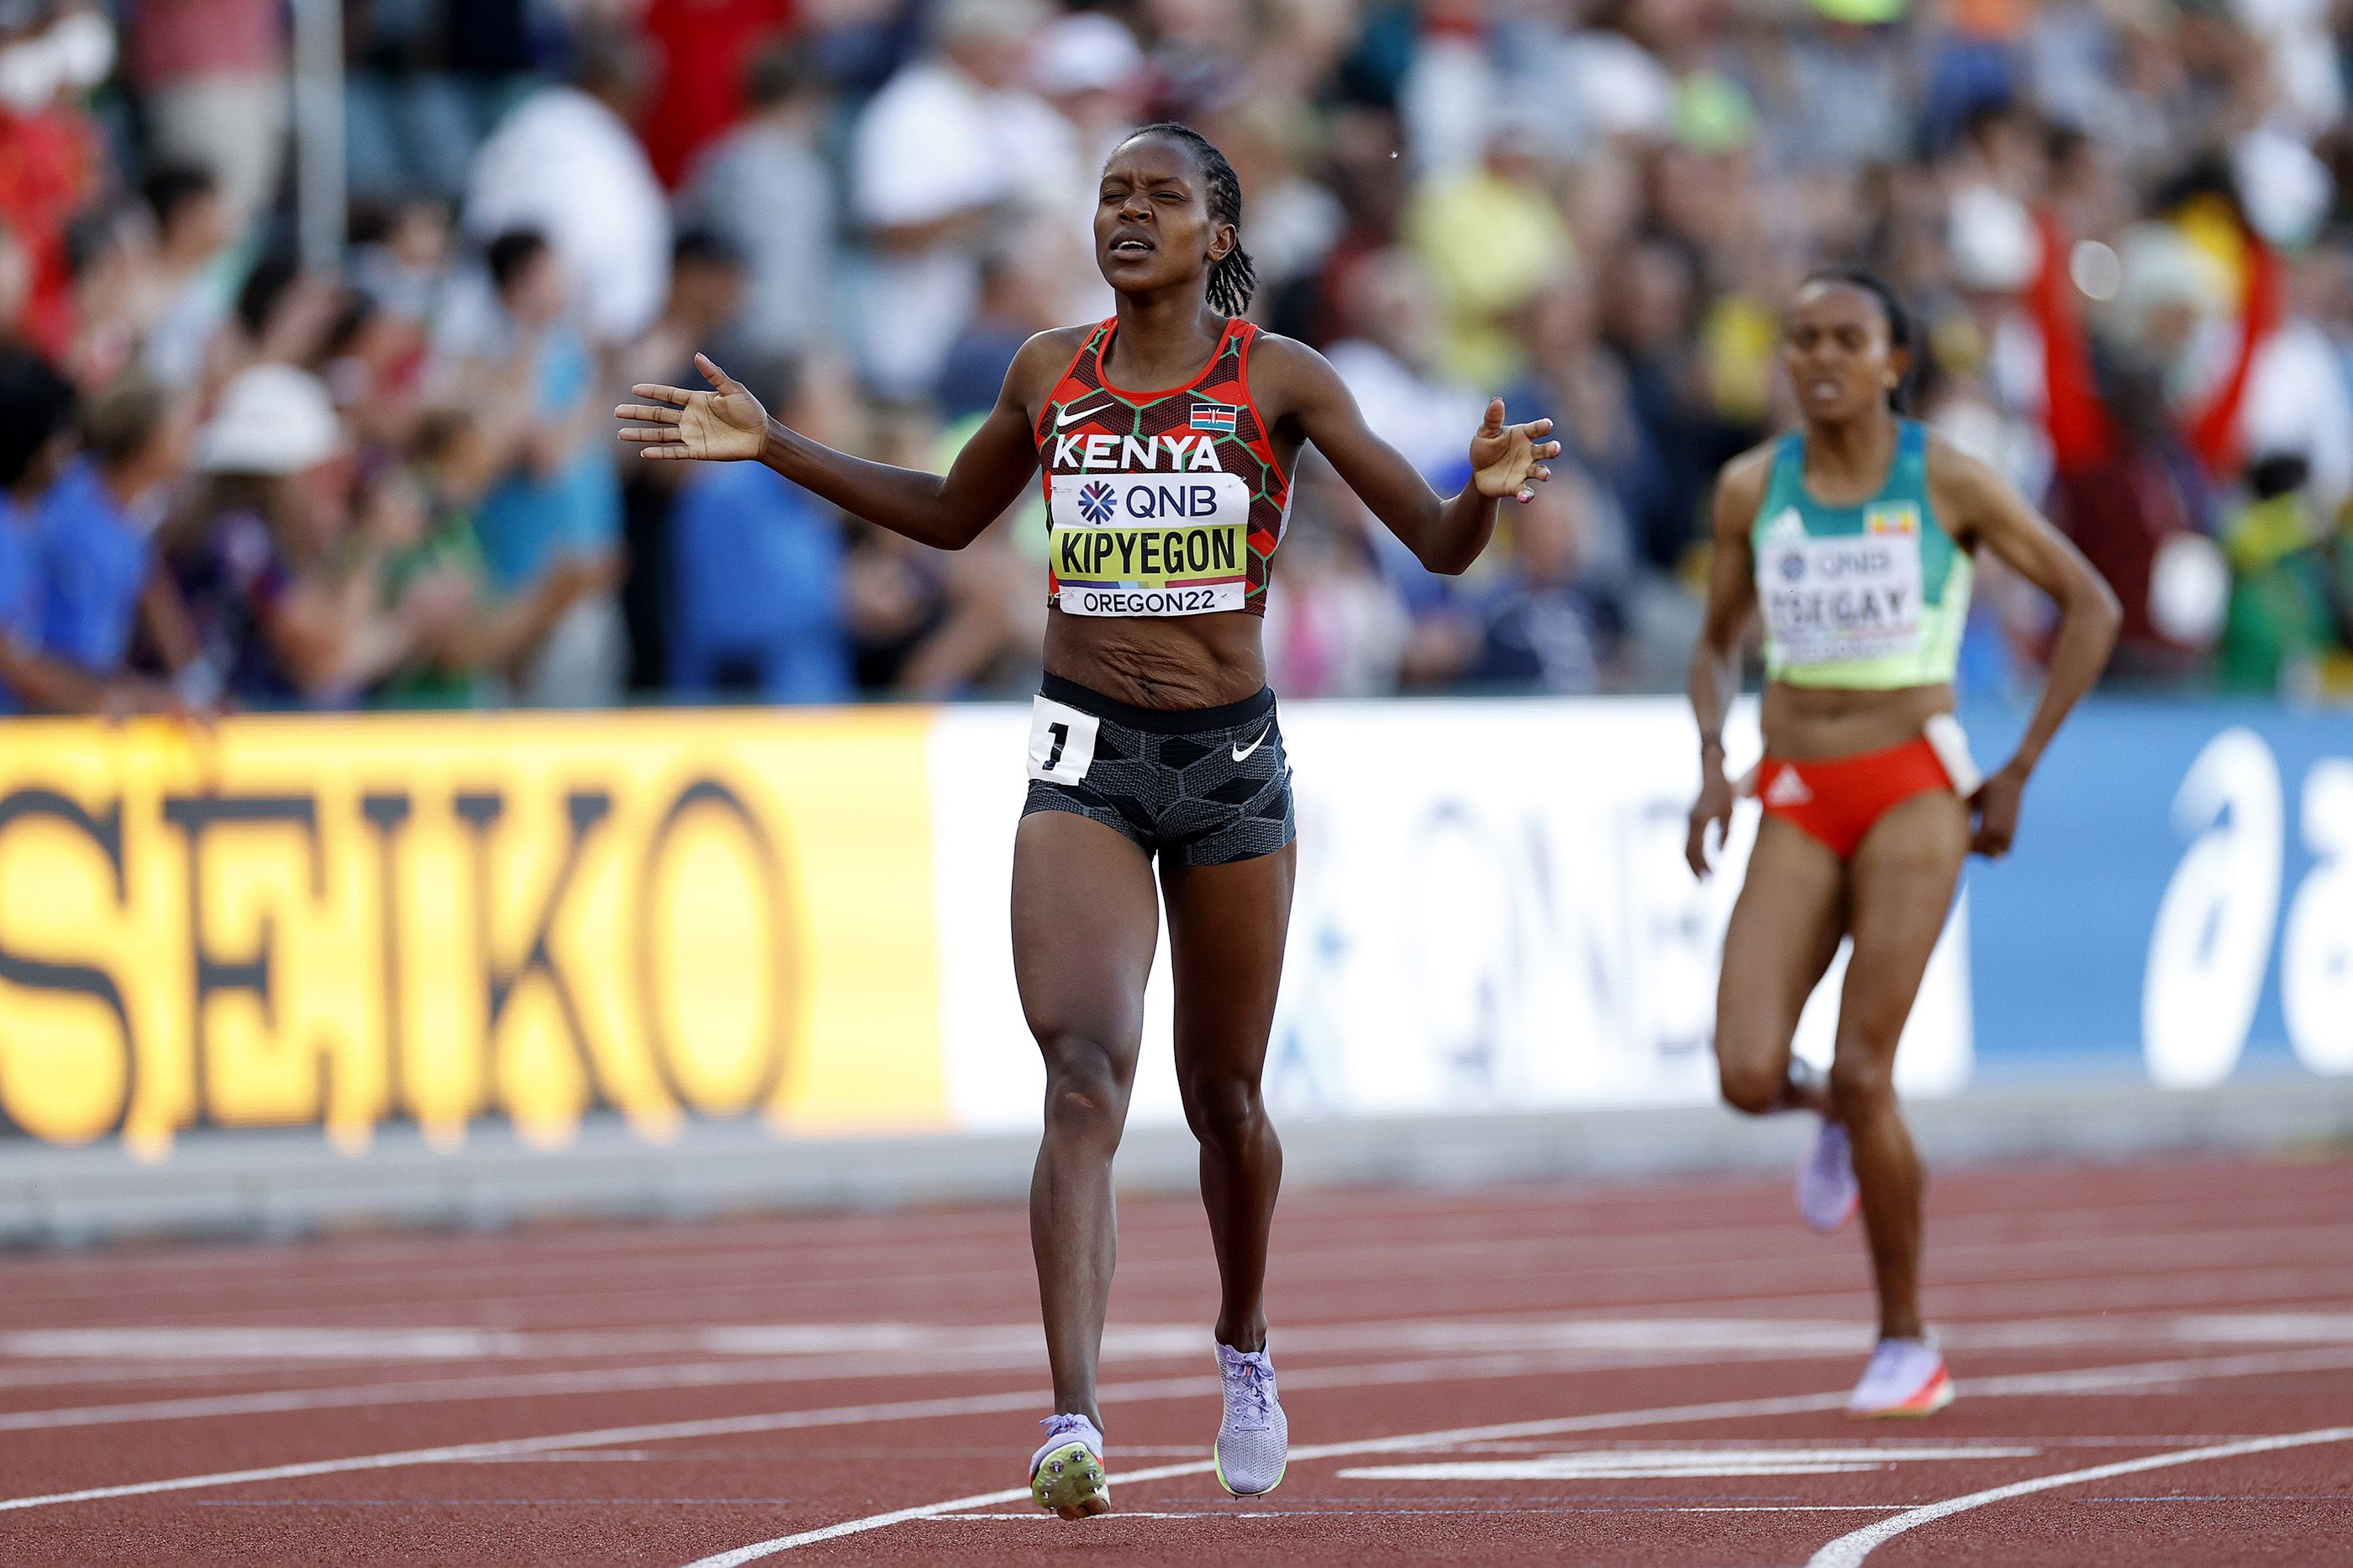 Faith Kipyegon wins the 1500m at the World Athletics Championships Oregon22